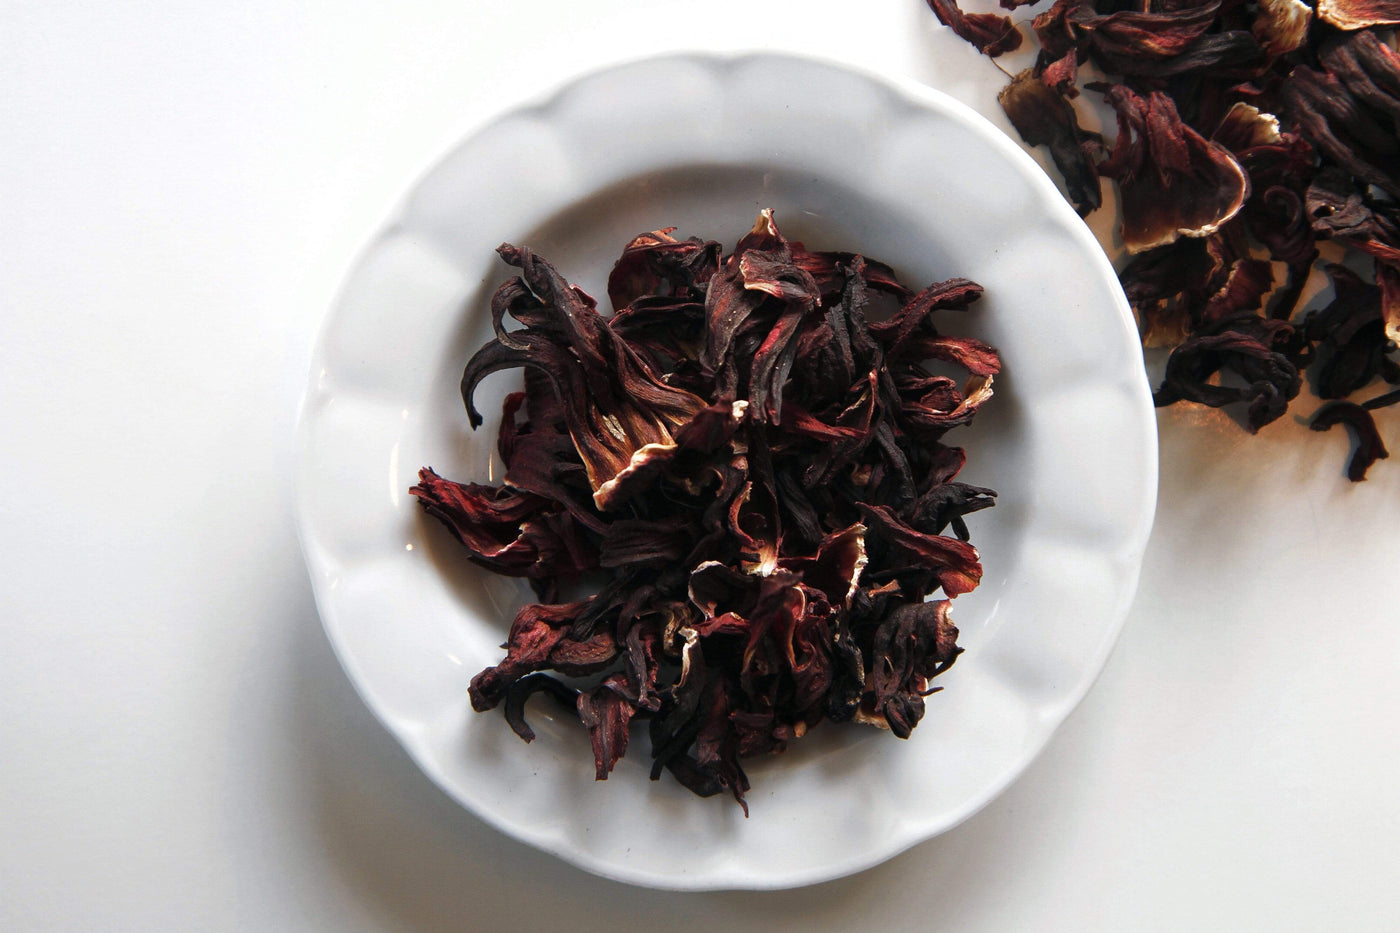 Jayida Che Herbal Tea Spot Hibiscus ( Organic)